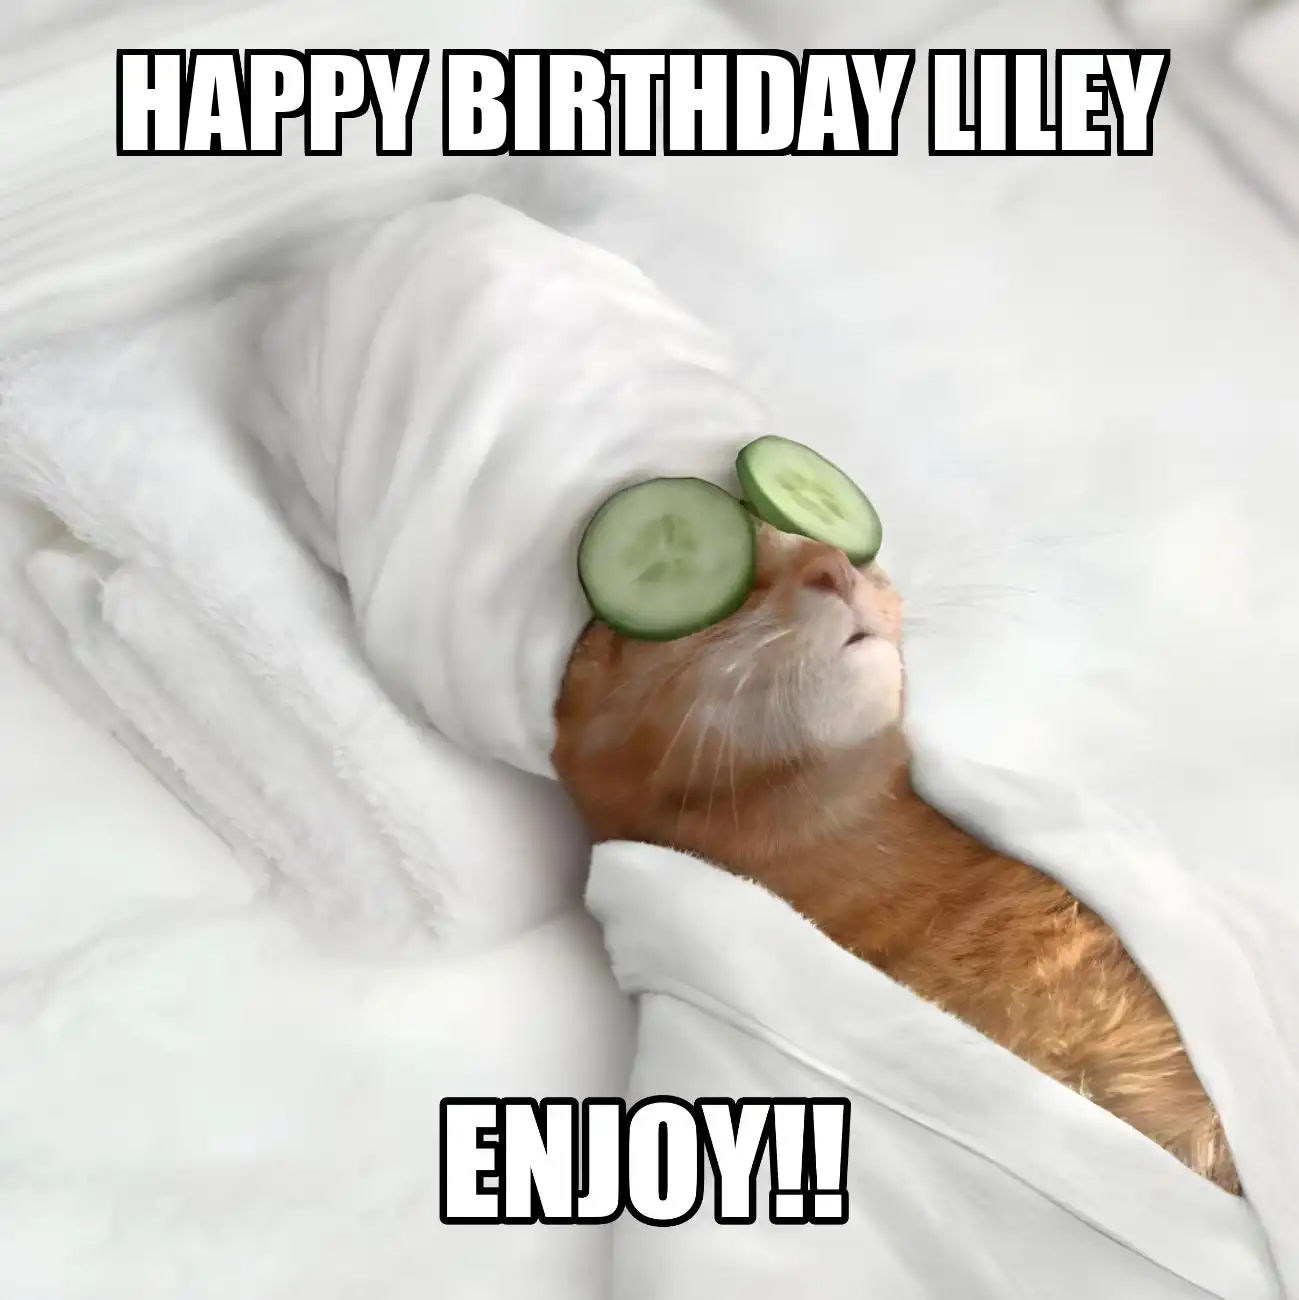 Happy Birthday Liley Enjoy Cat Meme